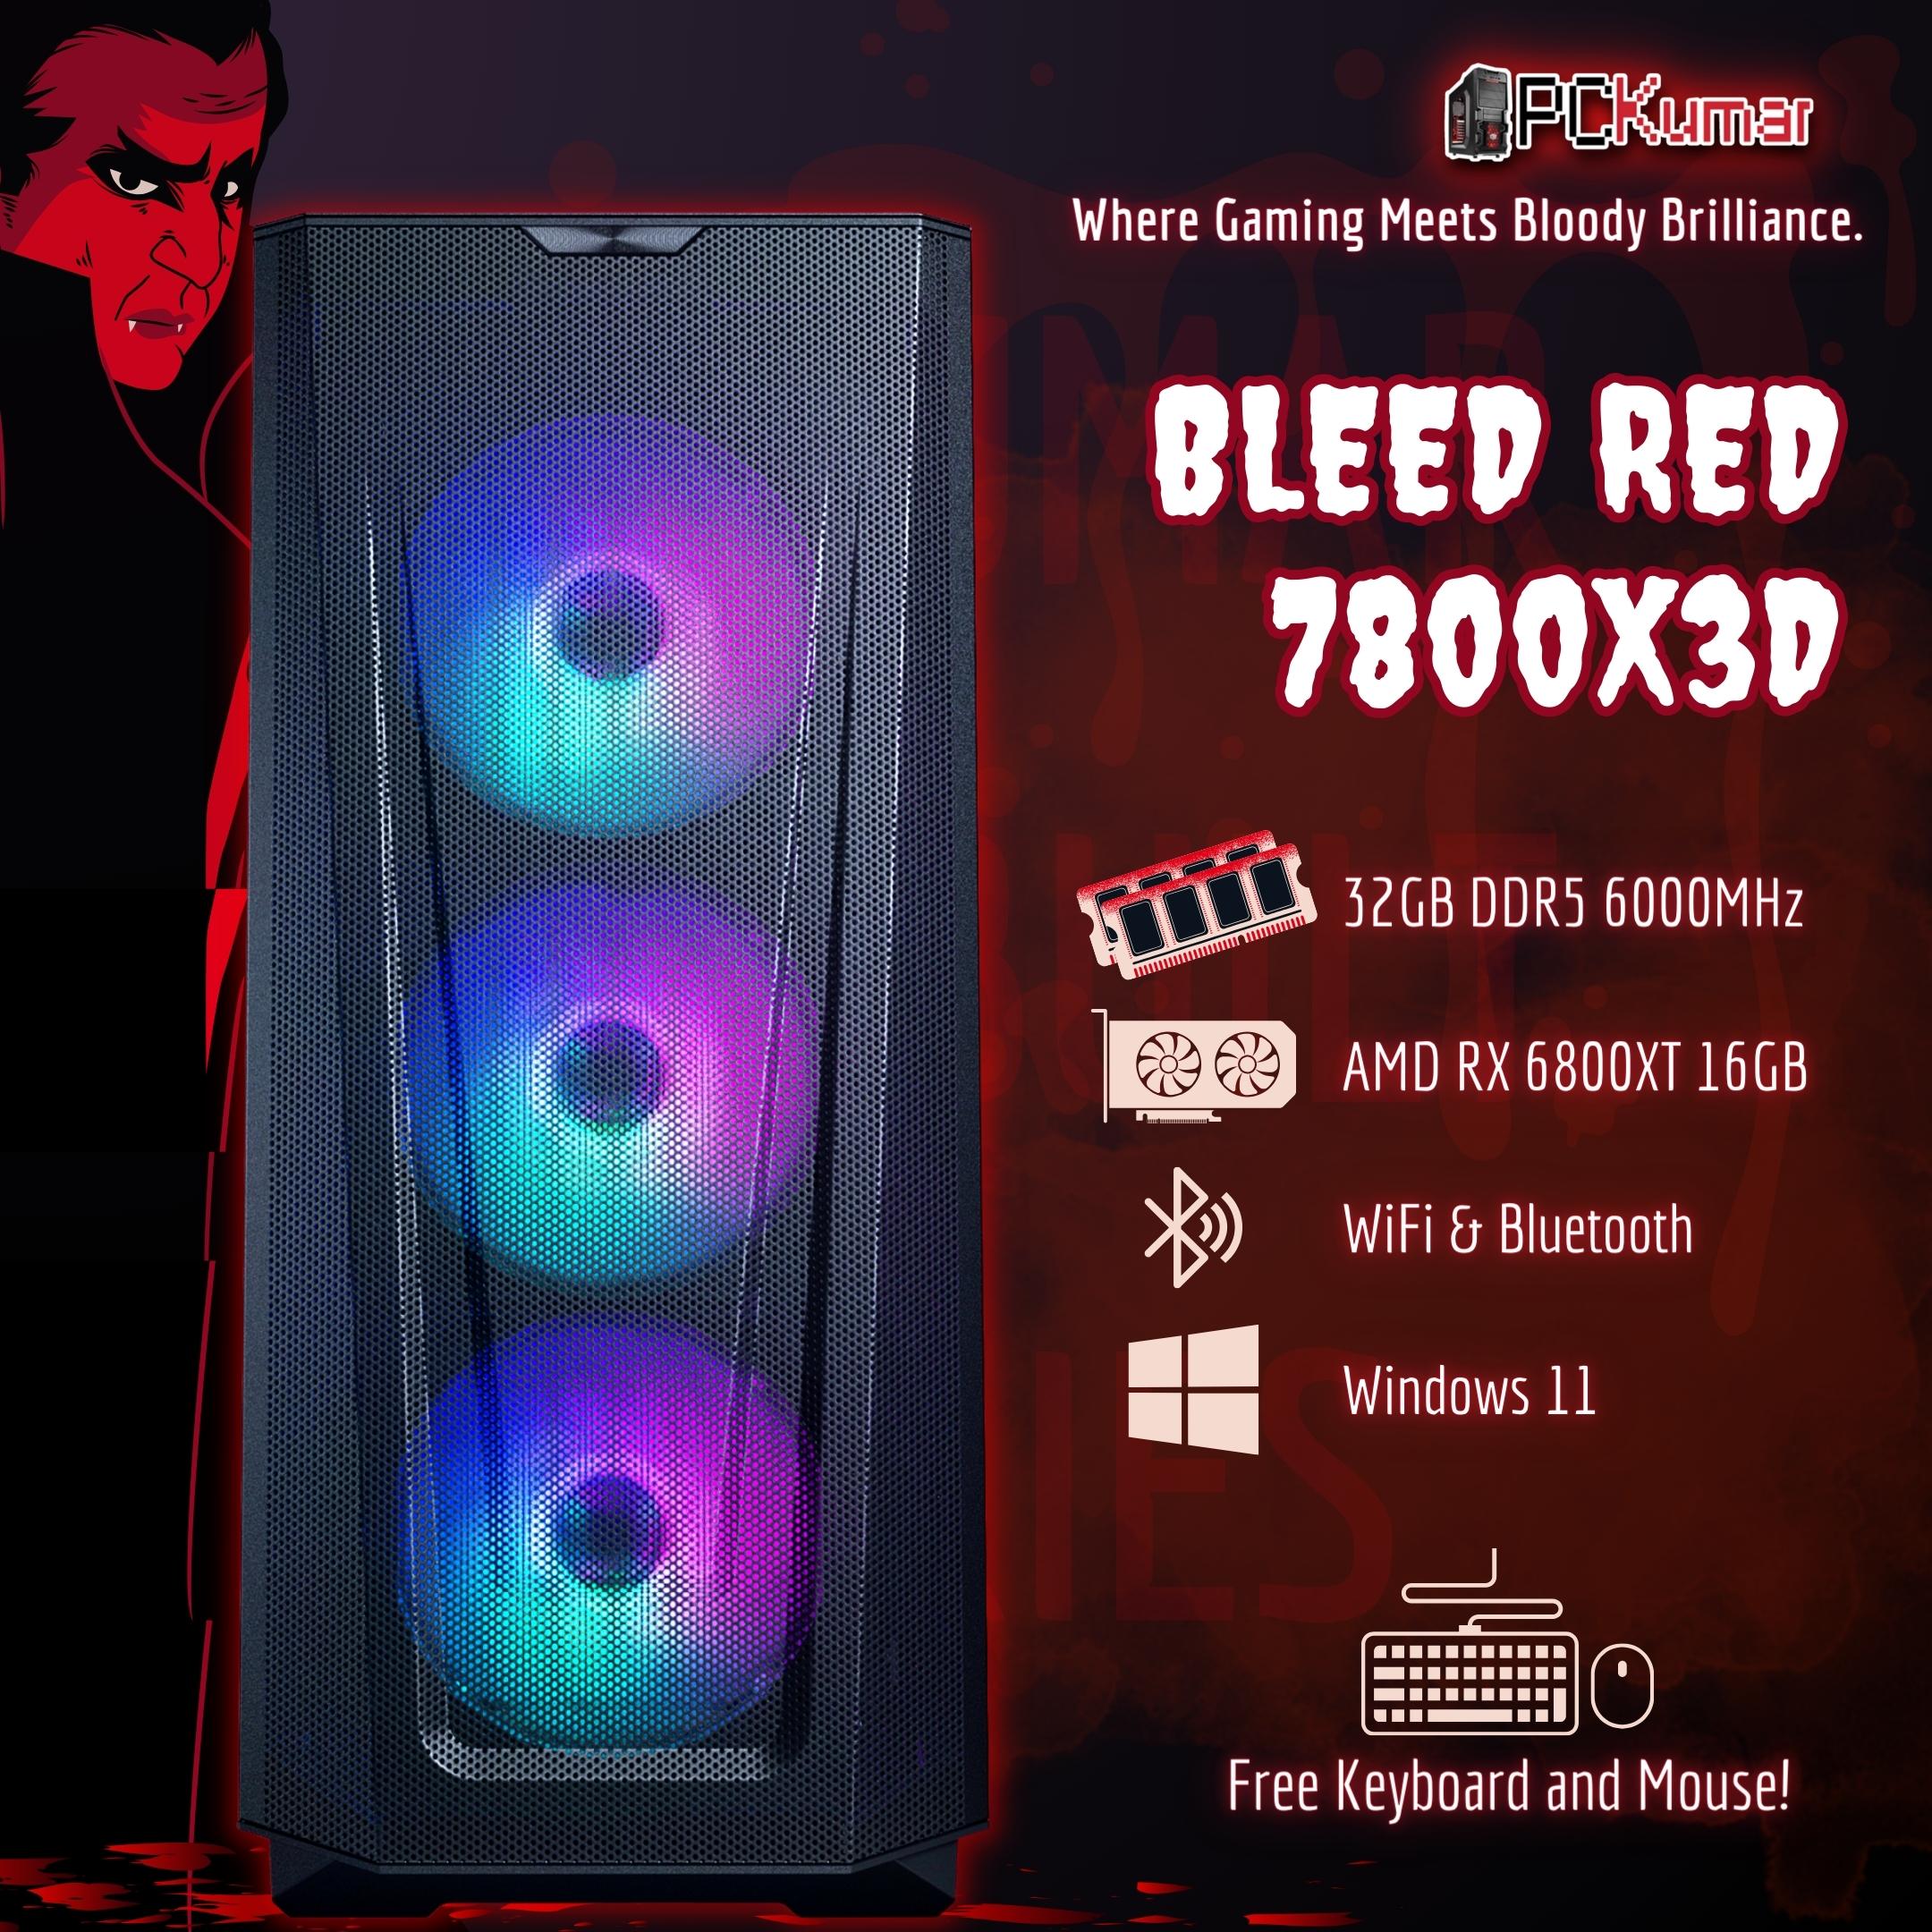 Bleed Red Gamer with AMD Ryzen 7 7800X3D + RX 6800XT 16GB